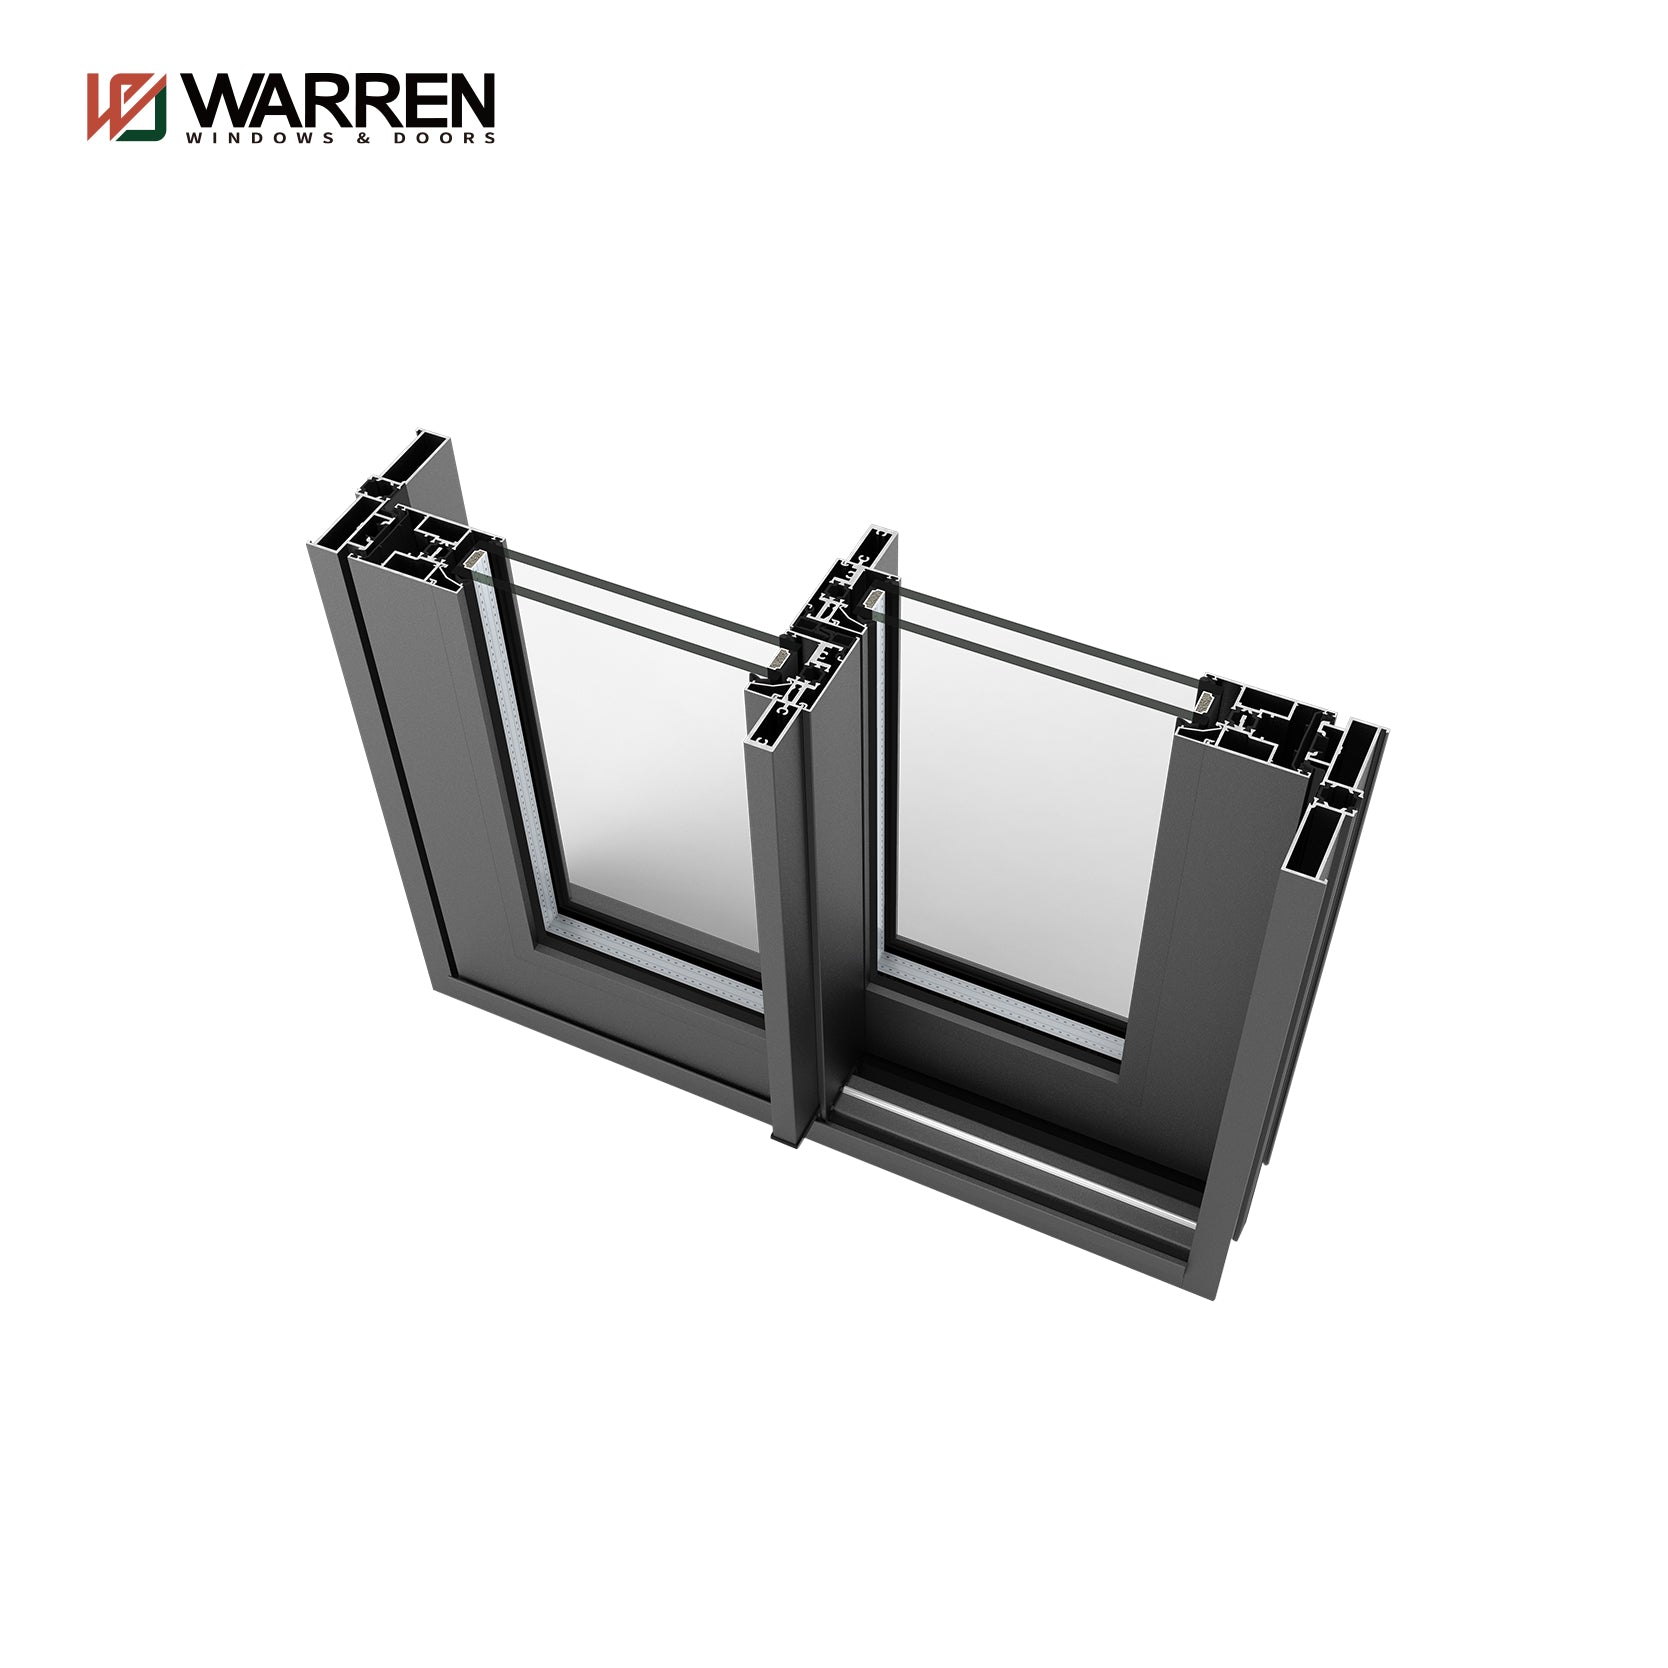 Warren Custom Strong Thermal Broken Patio Door Wholesale Aluminium Narrow Frame Large Glass Lift And  Sliding House Doors